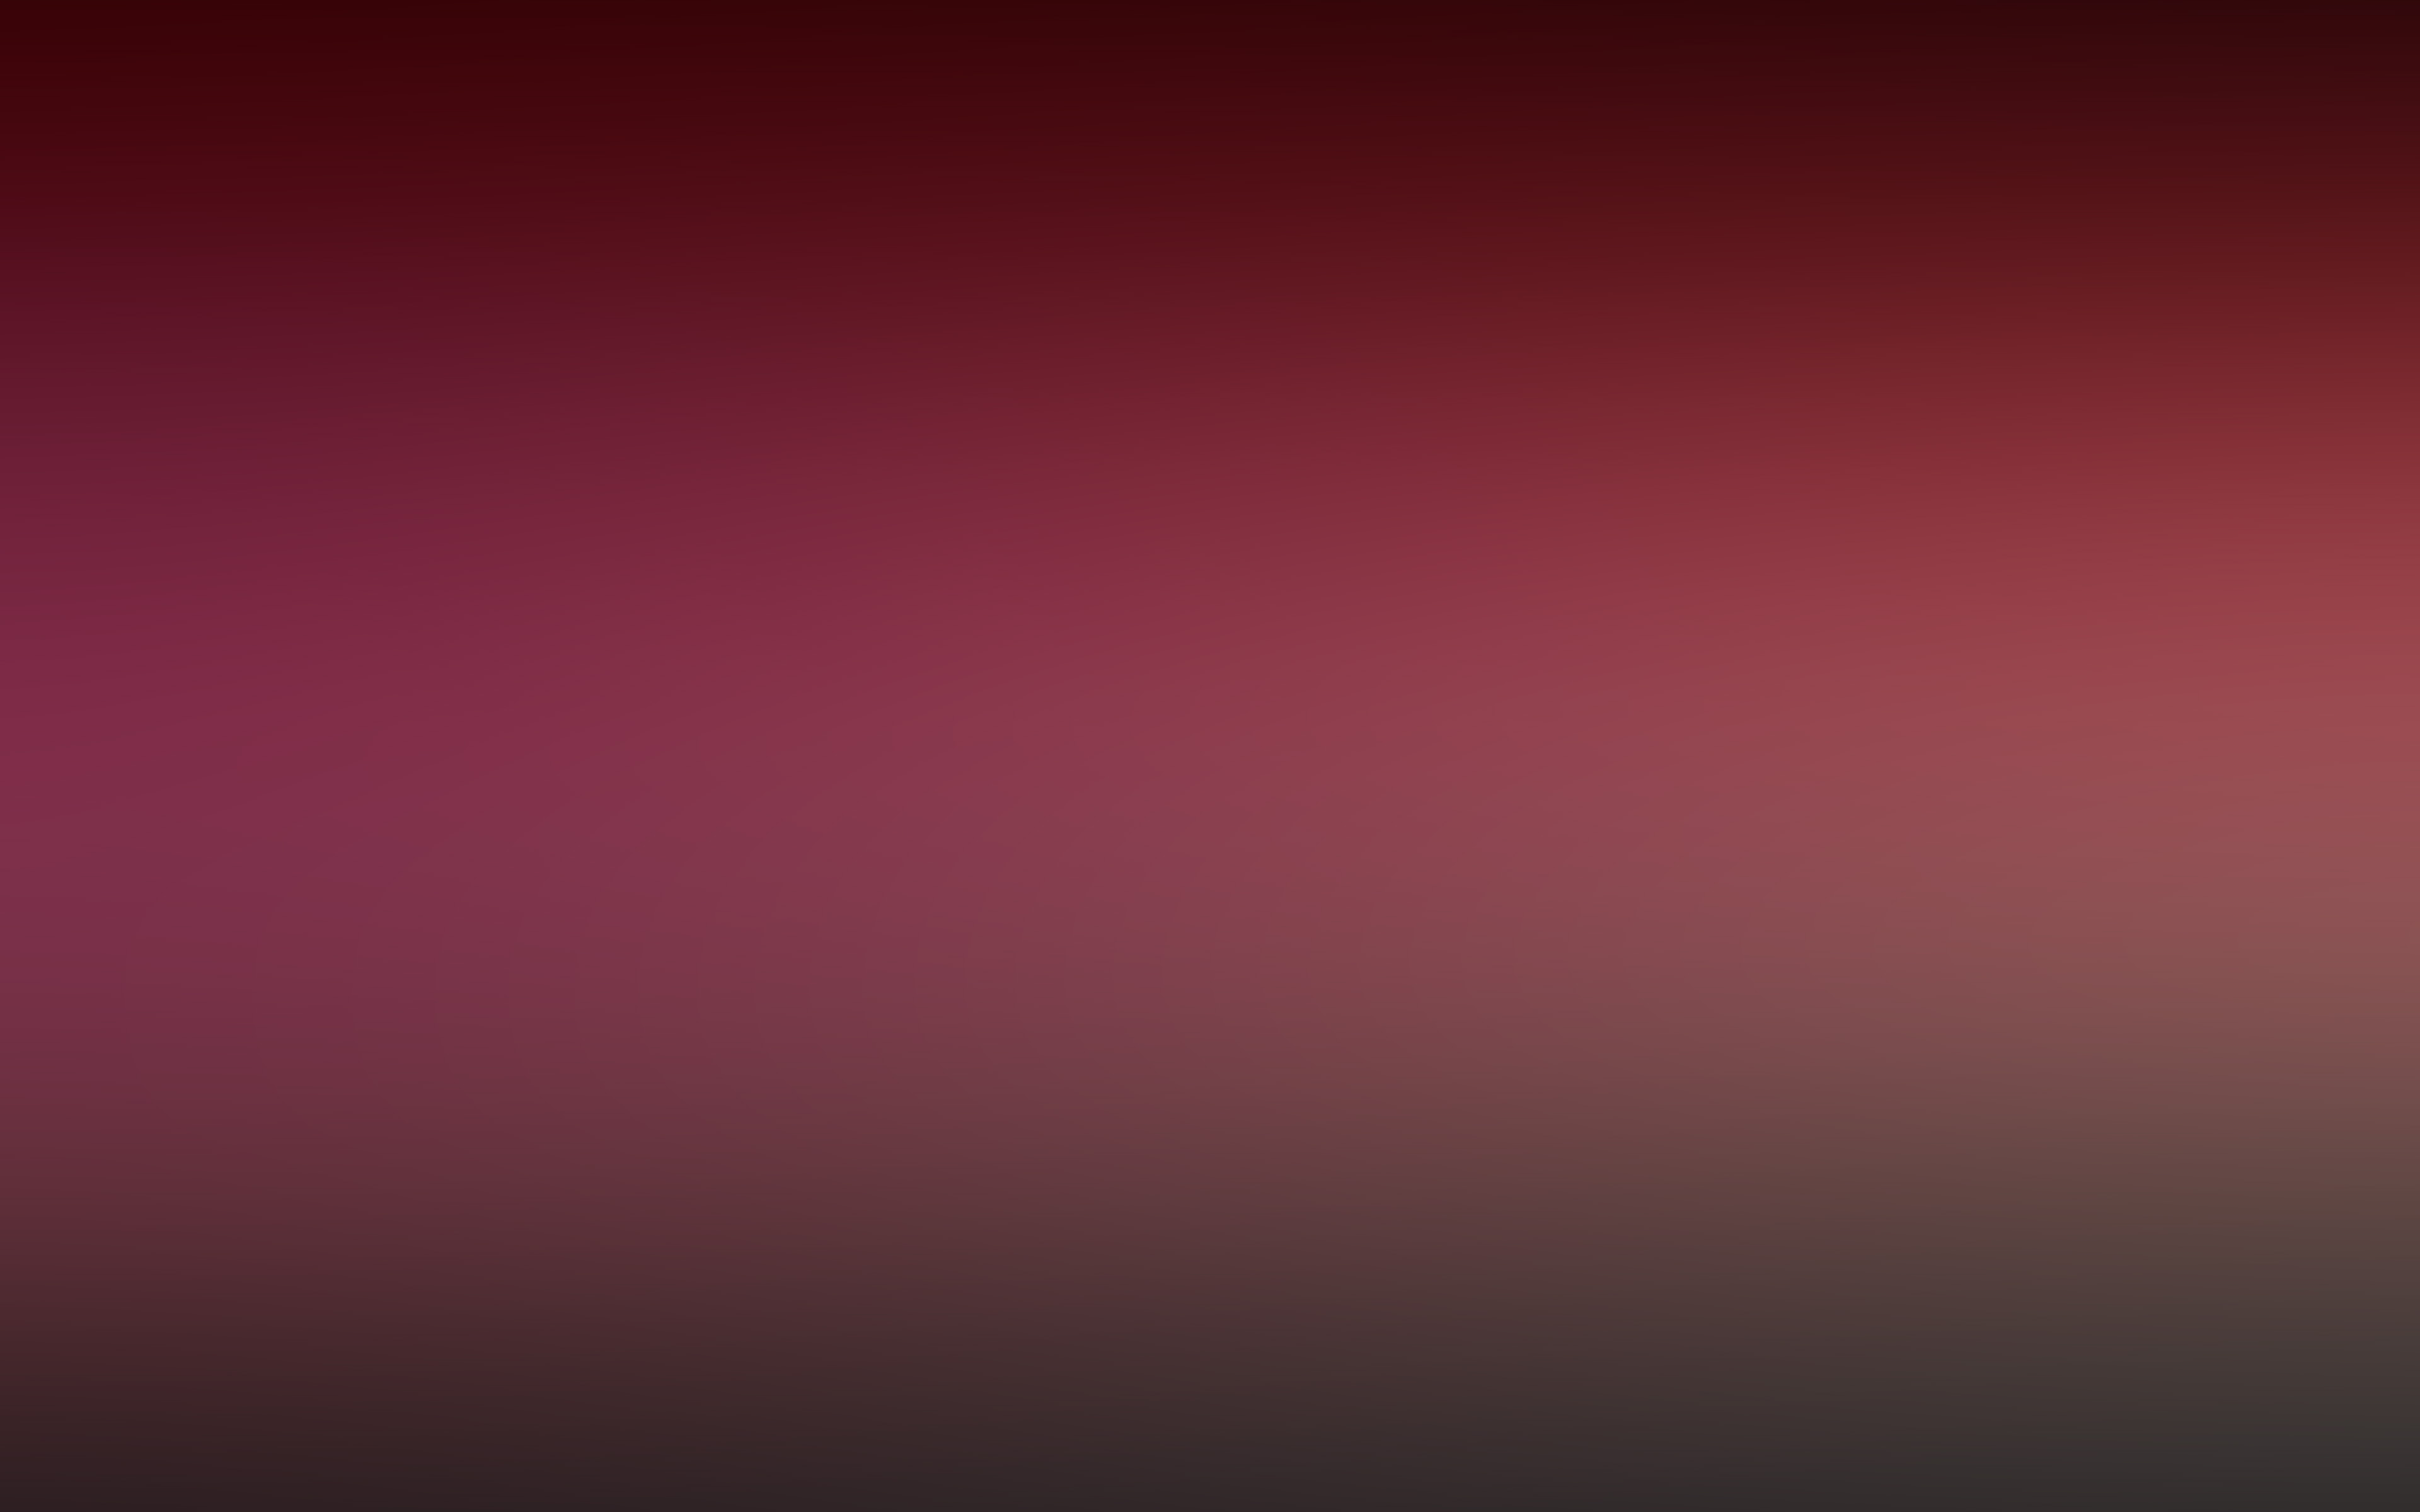 wallpaper for desktop, laptop. red soft pastel gradation blur